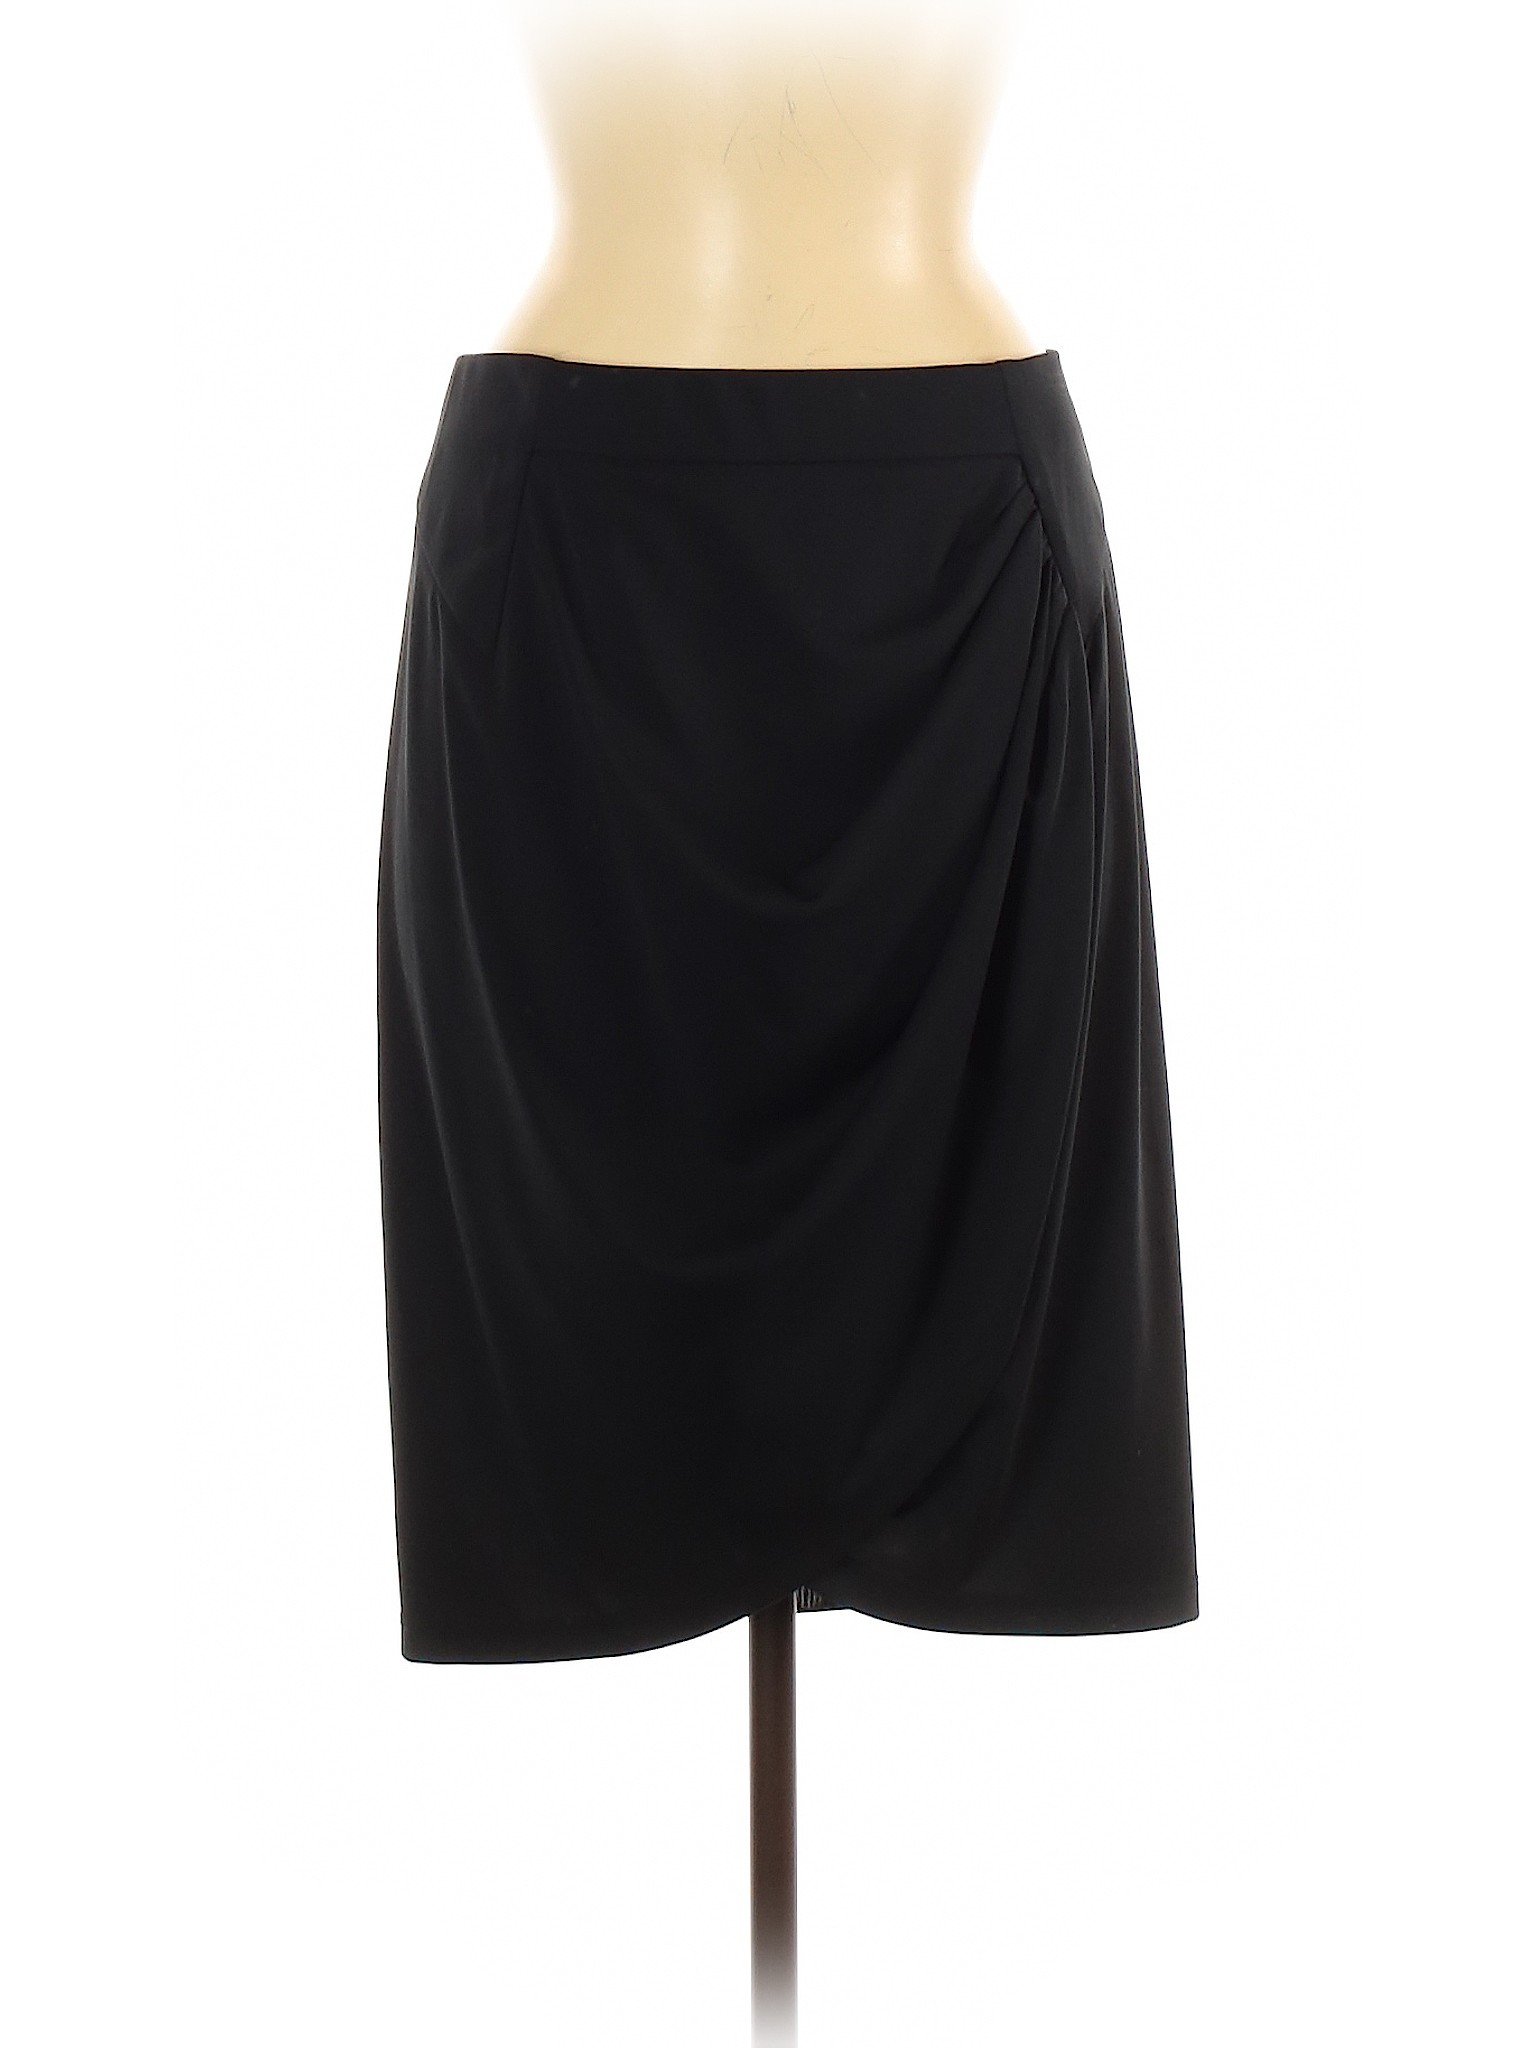 DressBarn Women Black Casual Skirt M | eBay